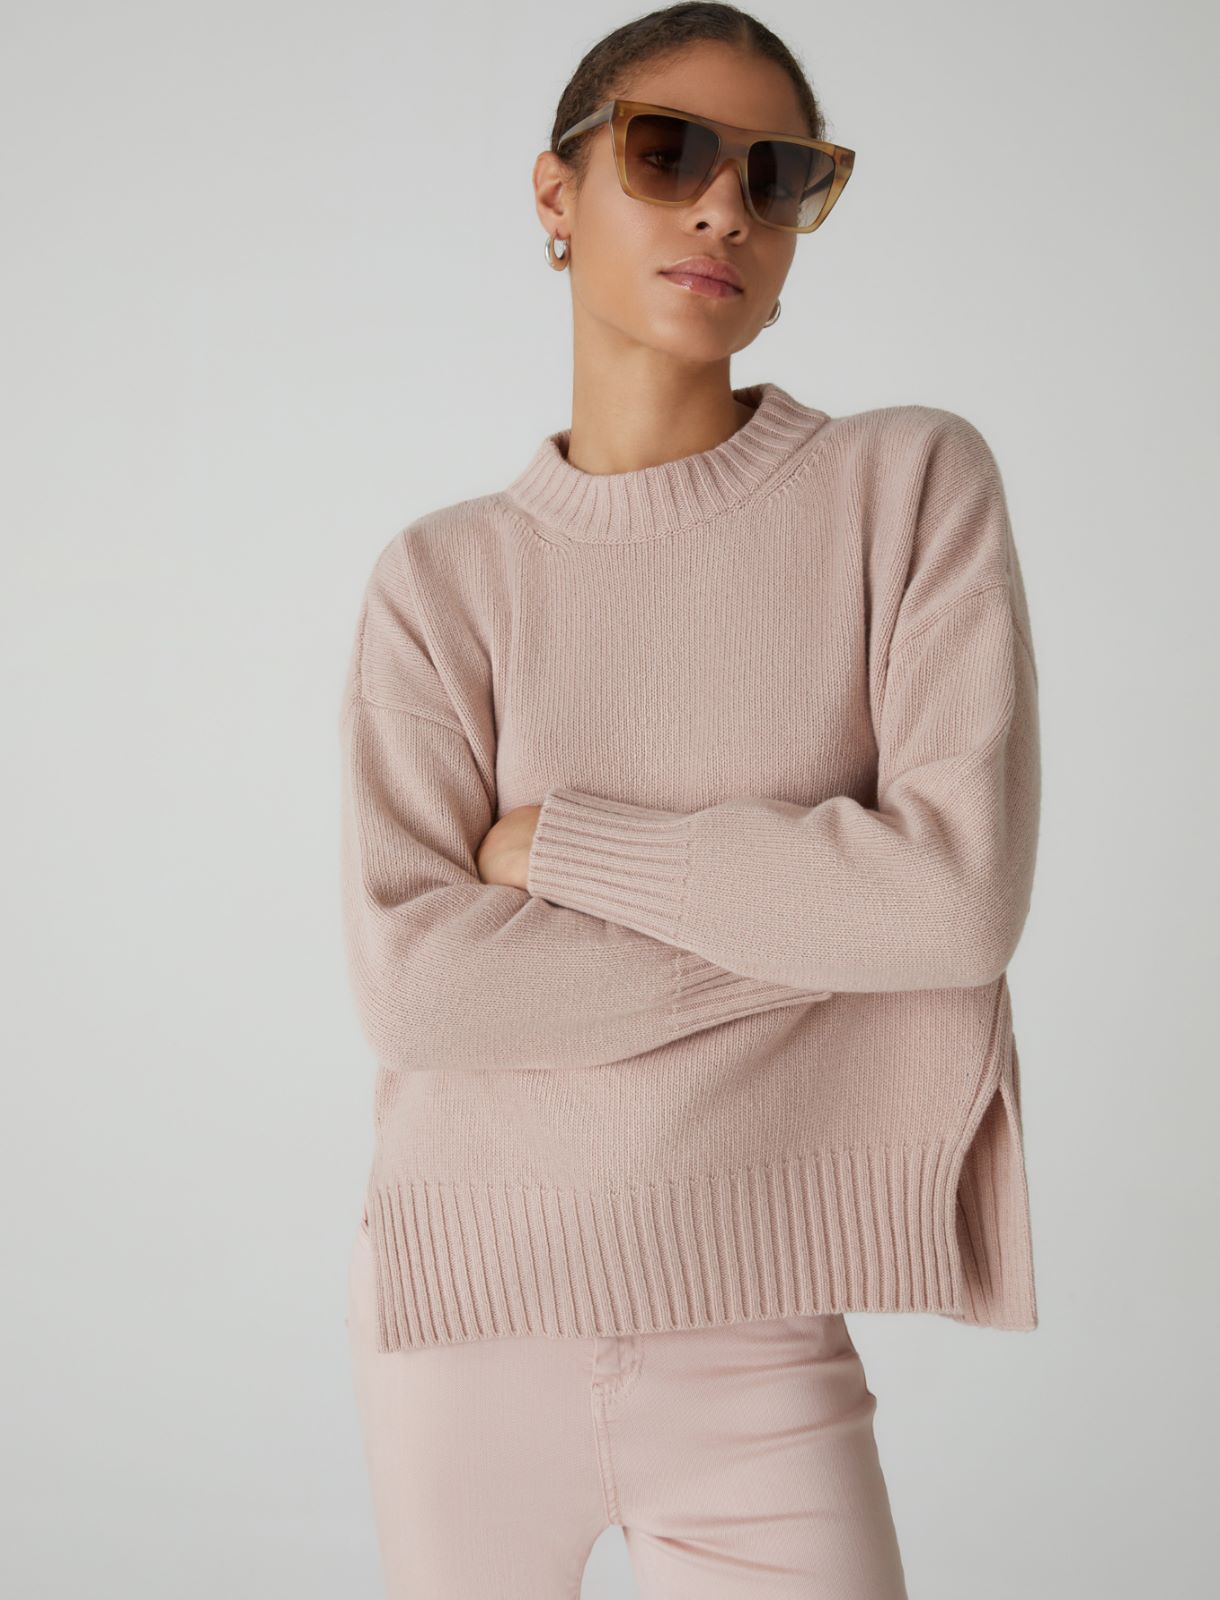 Cashmere-blend sweater - Nudo - Marella